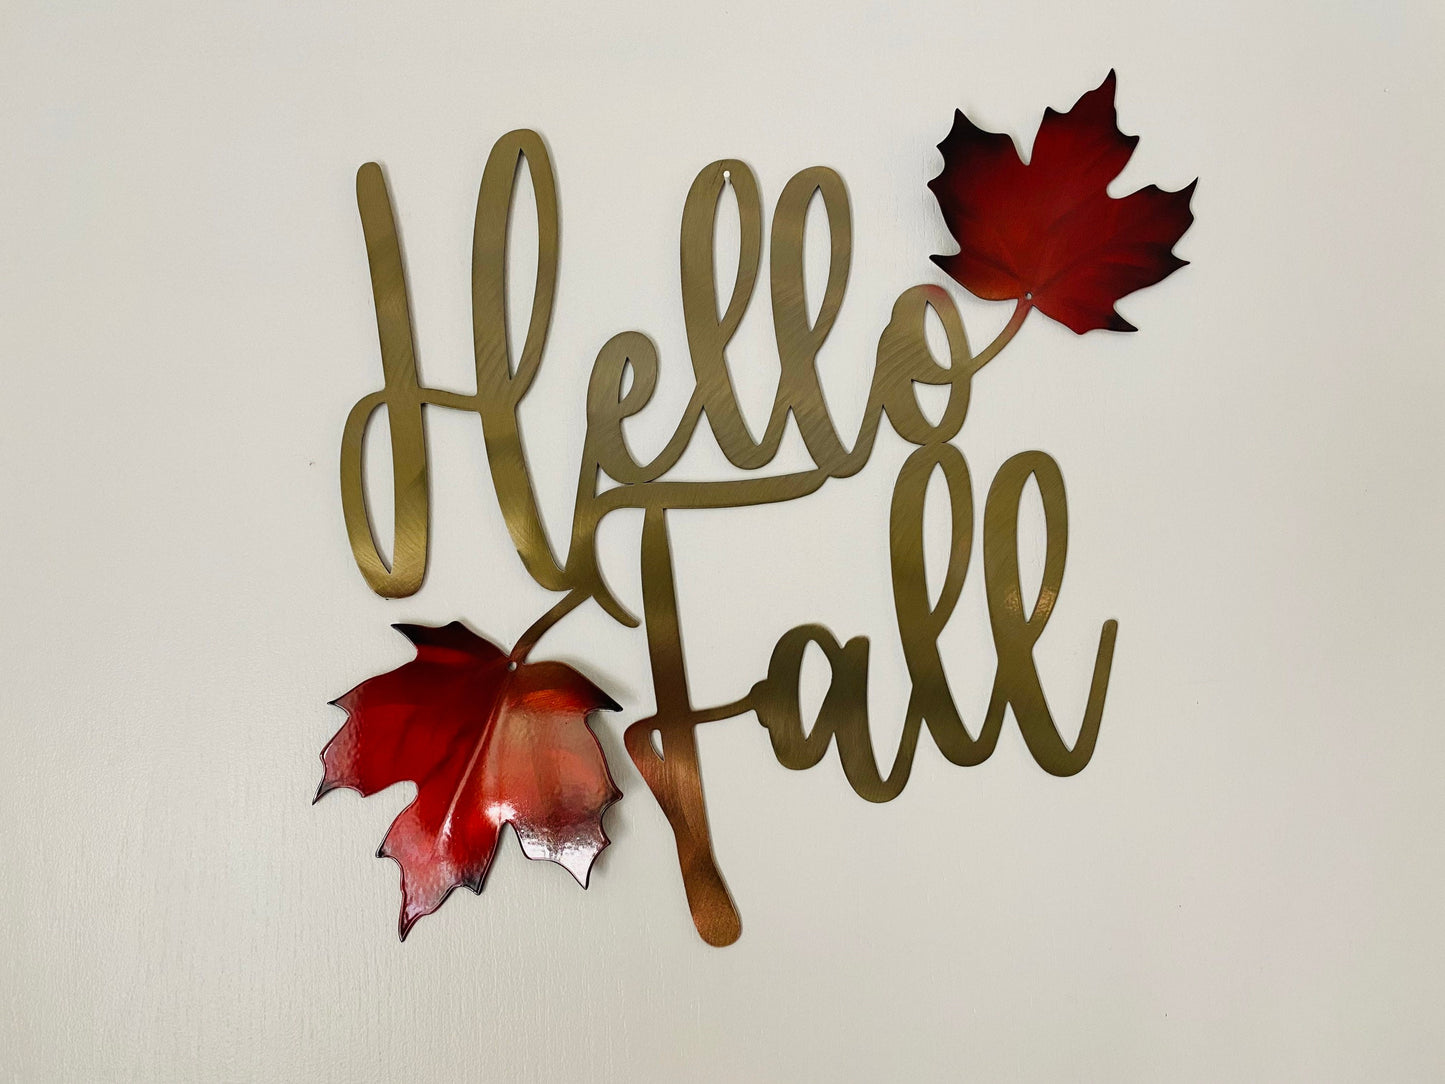 Autumn decor, fall decor, hello fall decor, rustic metal wall hanging, autumn vibes decor, maple leaf decor, changing leaves decor